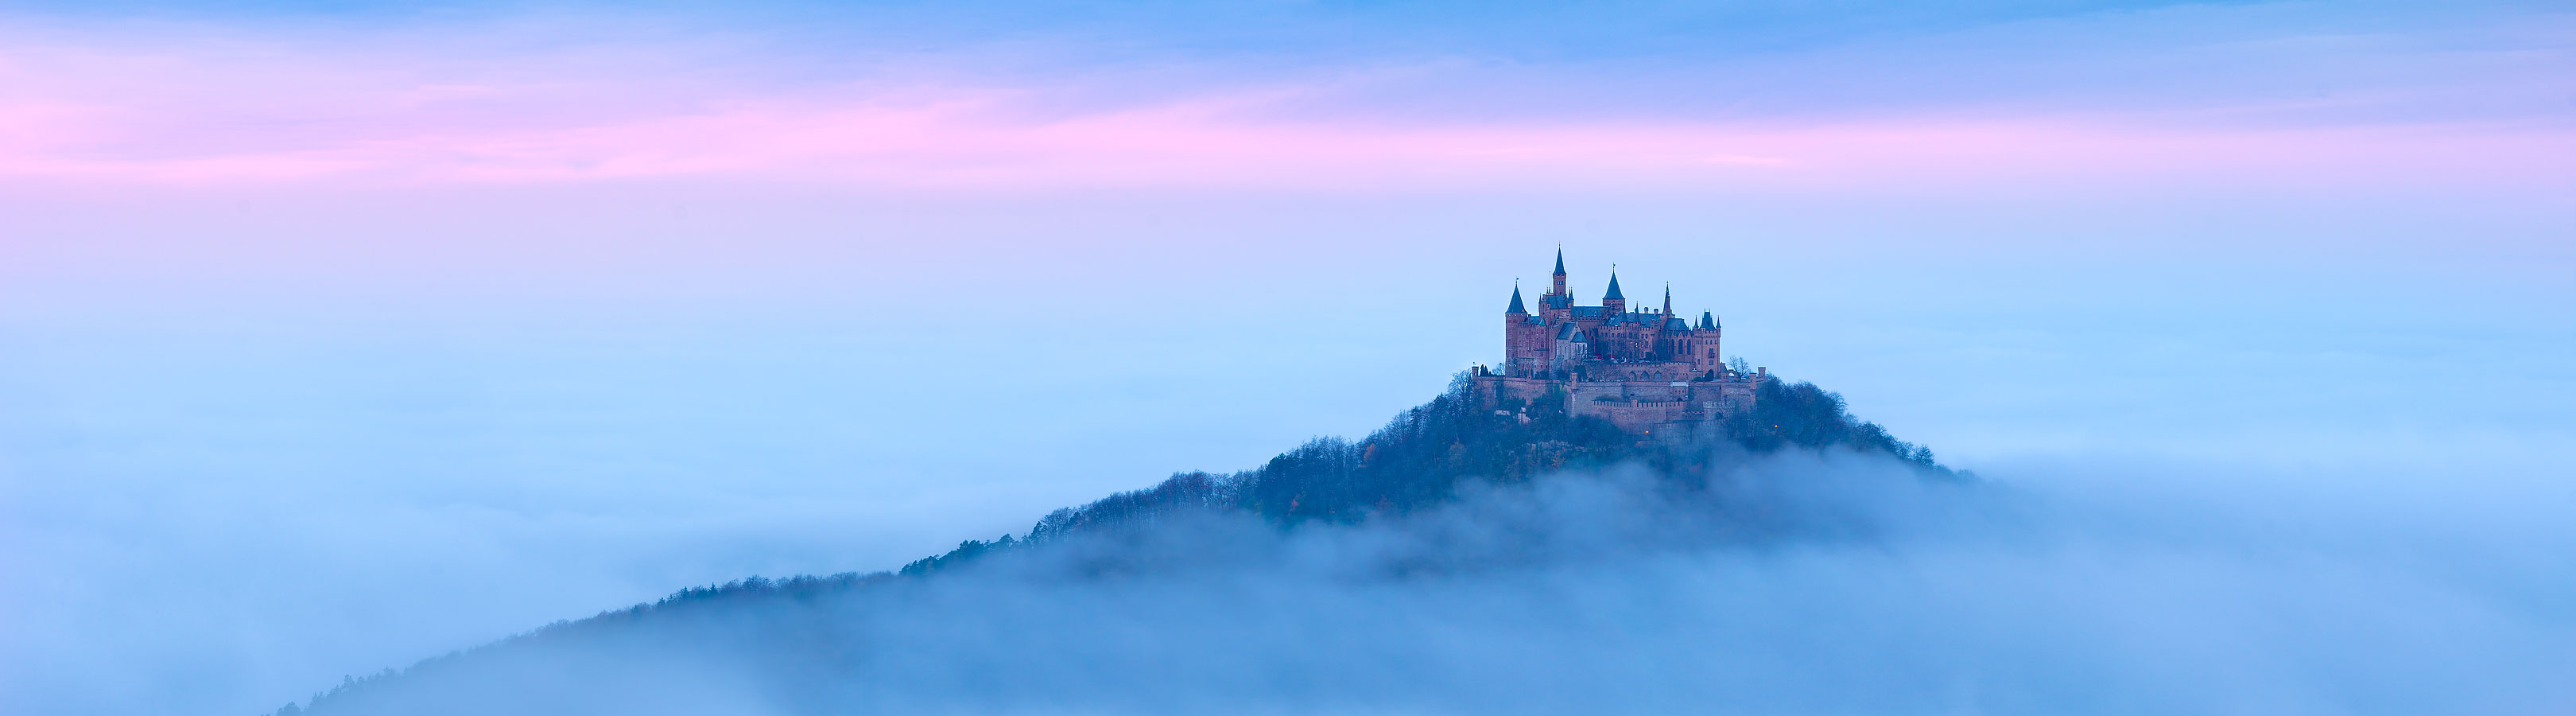 Hohenzollern im Nebel